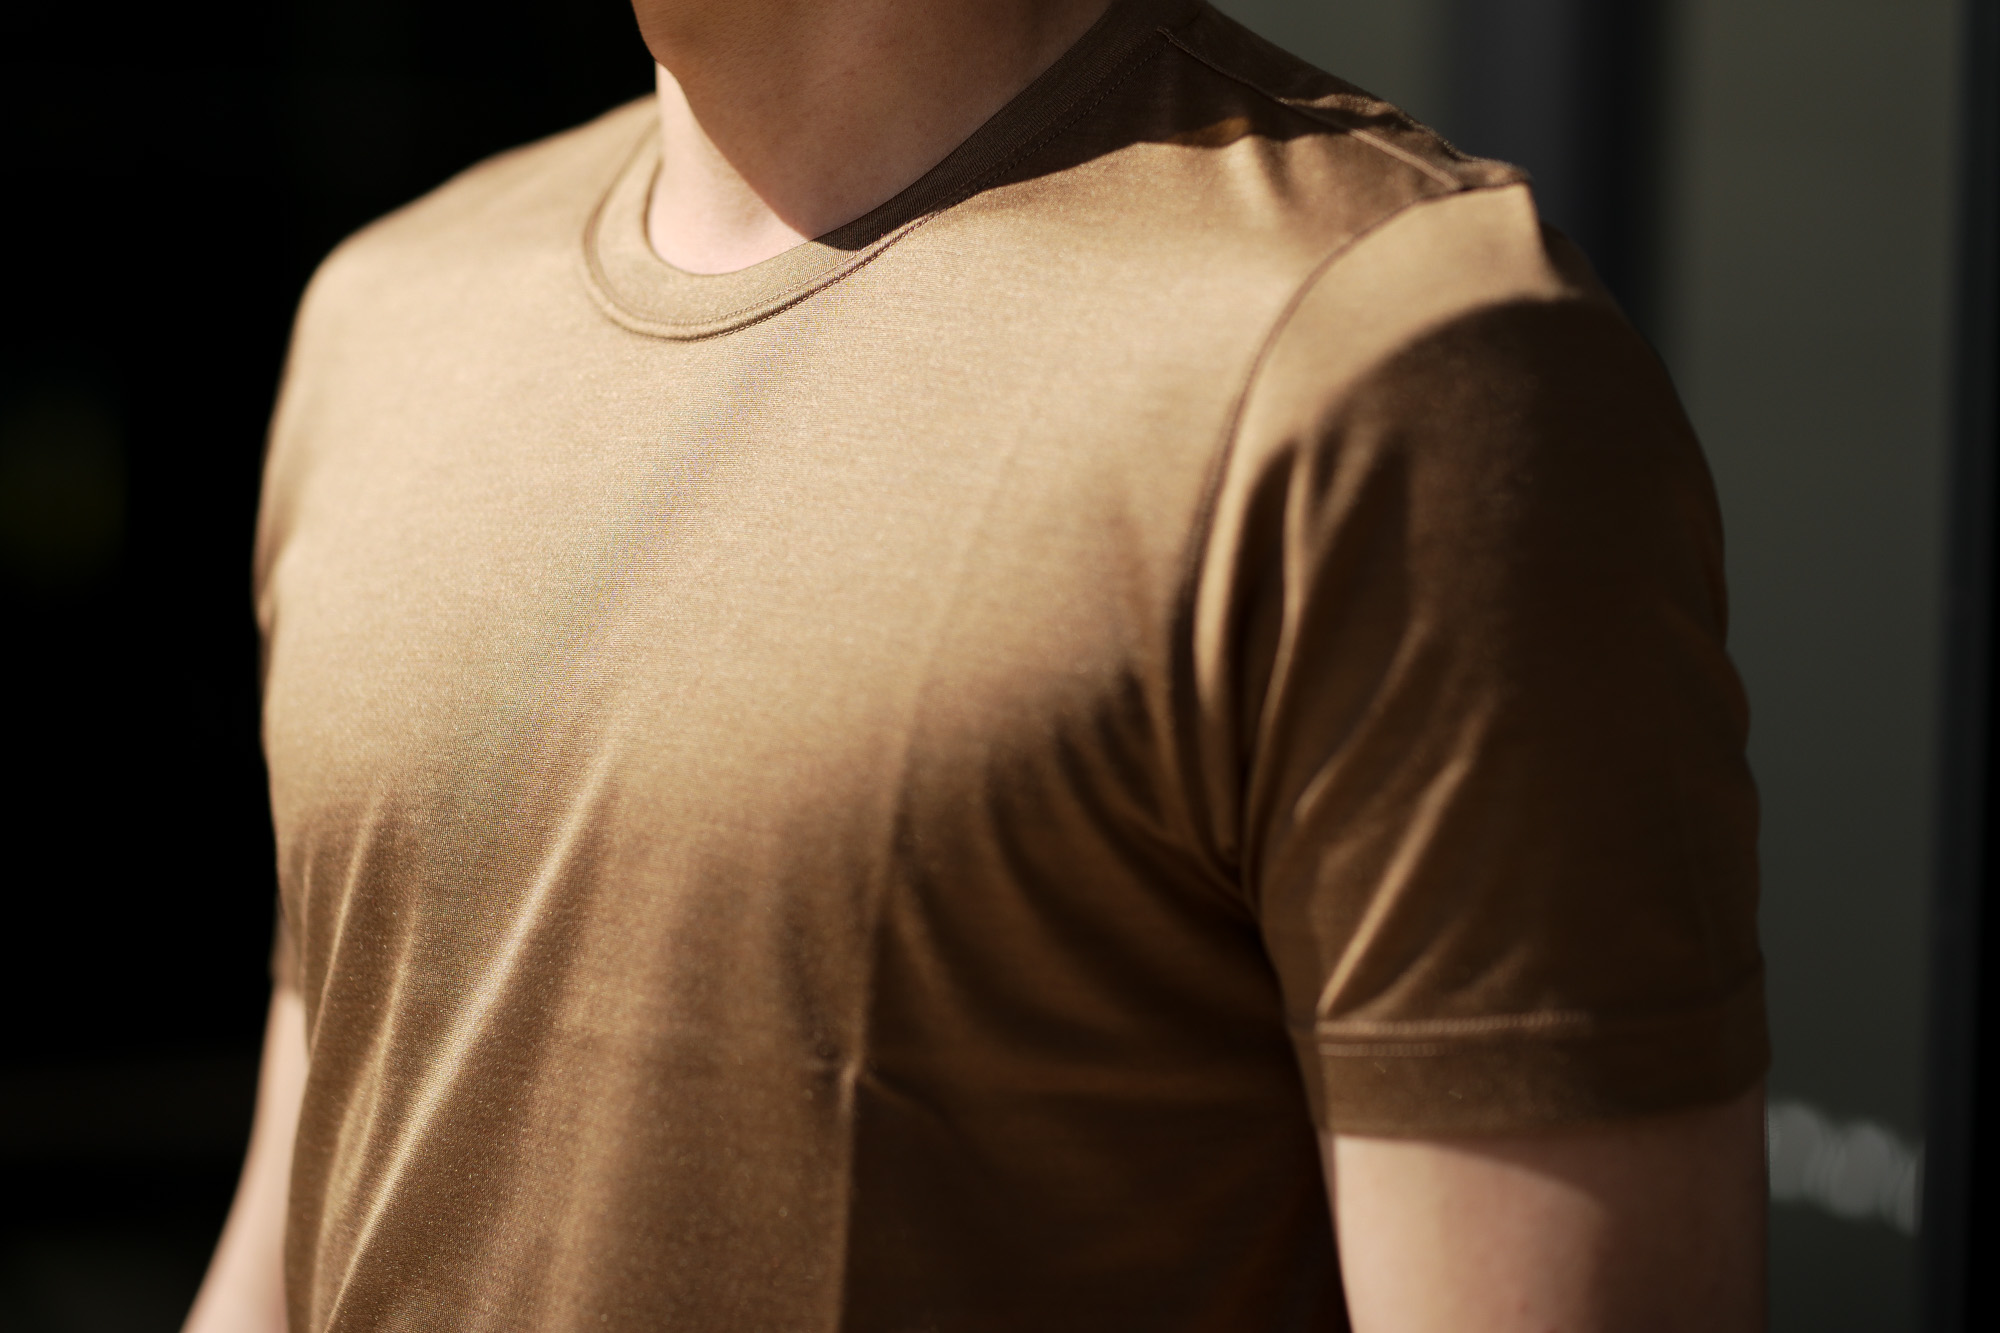 Gran Sasso (グランサッソ) Silk T-shirt (シルク Tシャツ) SETA (シルク 100%) ショートスリーブ シルク Tシャツ GOLD (ゴールド・160) made in italy (イタリア製) 2020 春夏新作  愛知 名古屋 altoediritto アルトエデリット